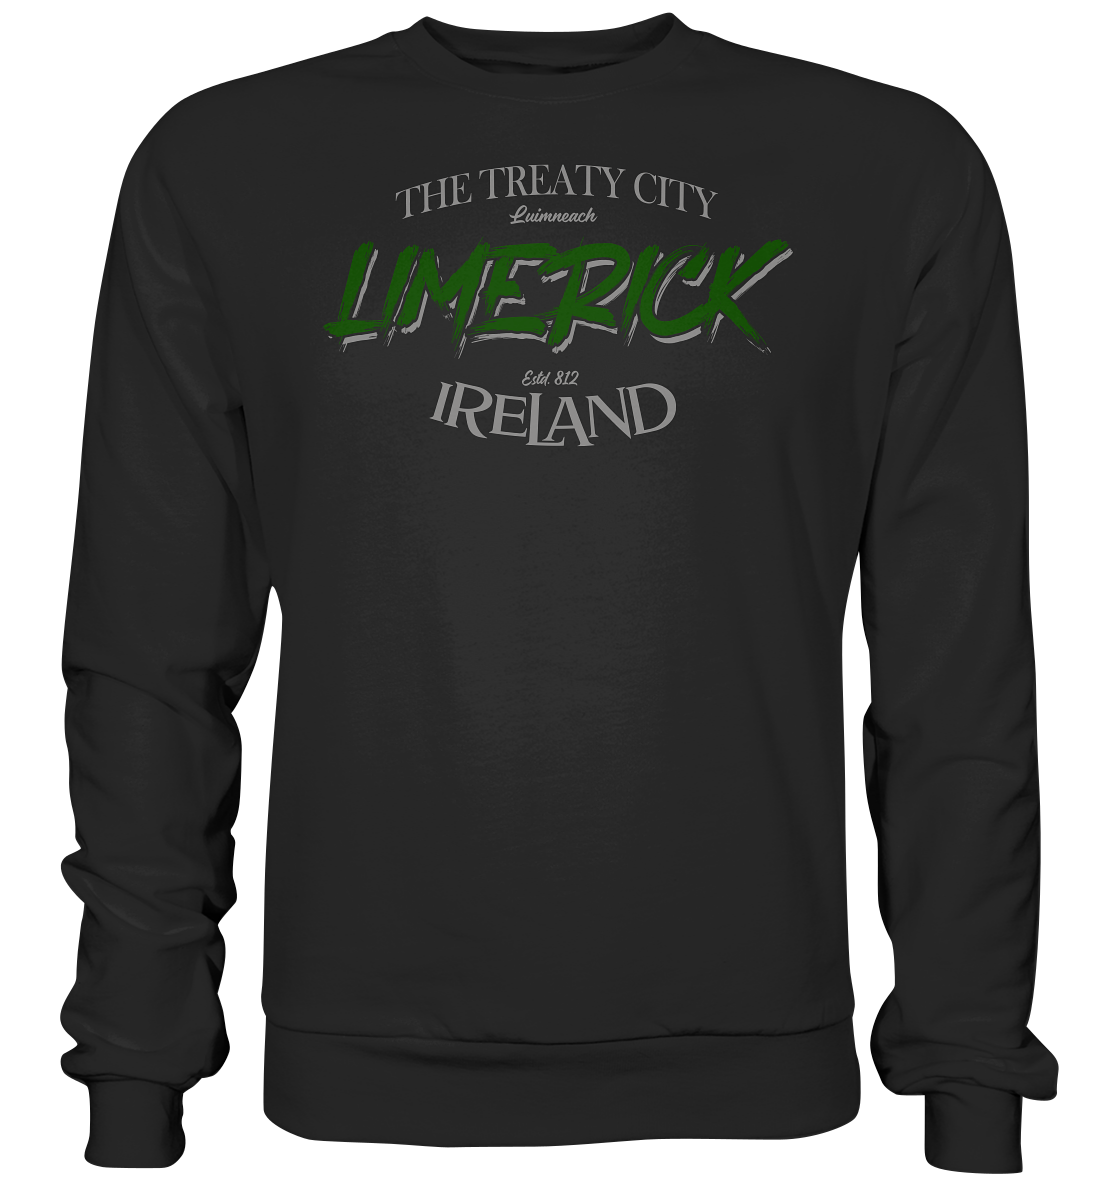 Limerick "The Treaty City" - Premium Sweatshirt